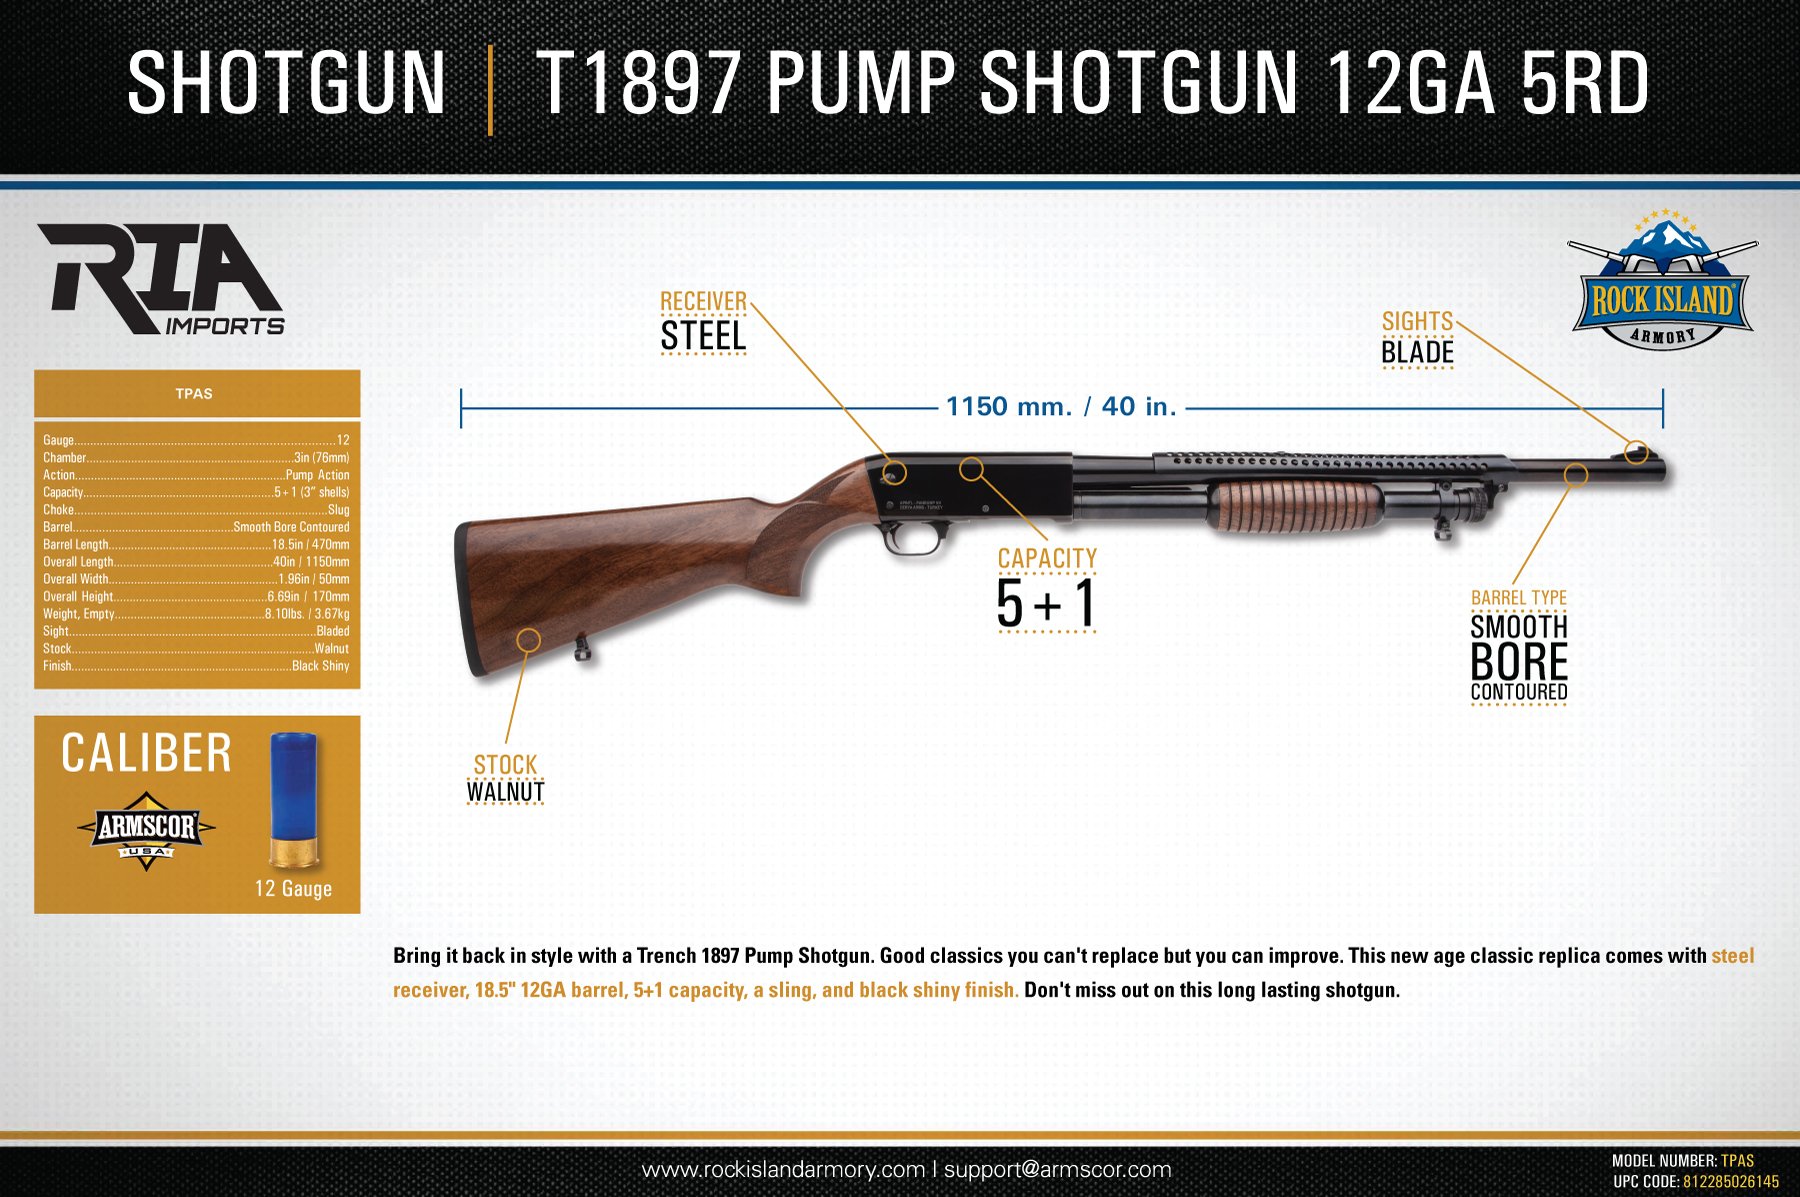 TPAS Pump Shotgun 12GA 5RD.